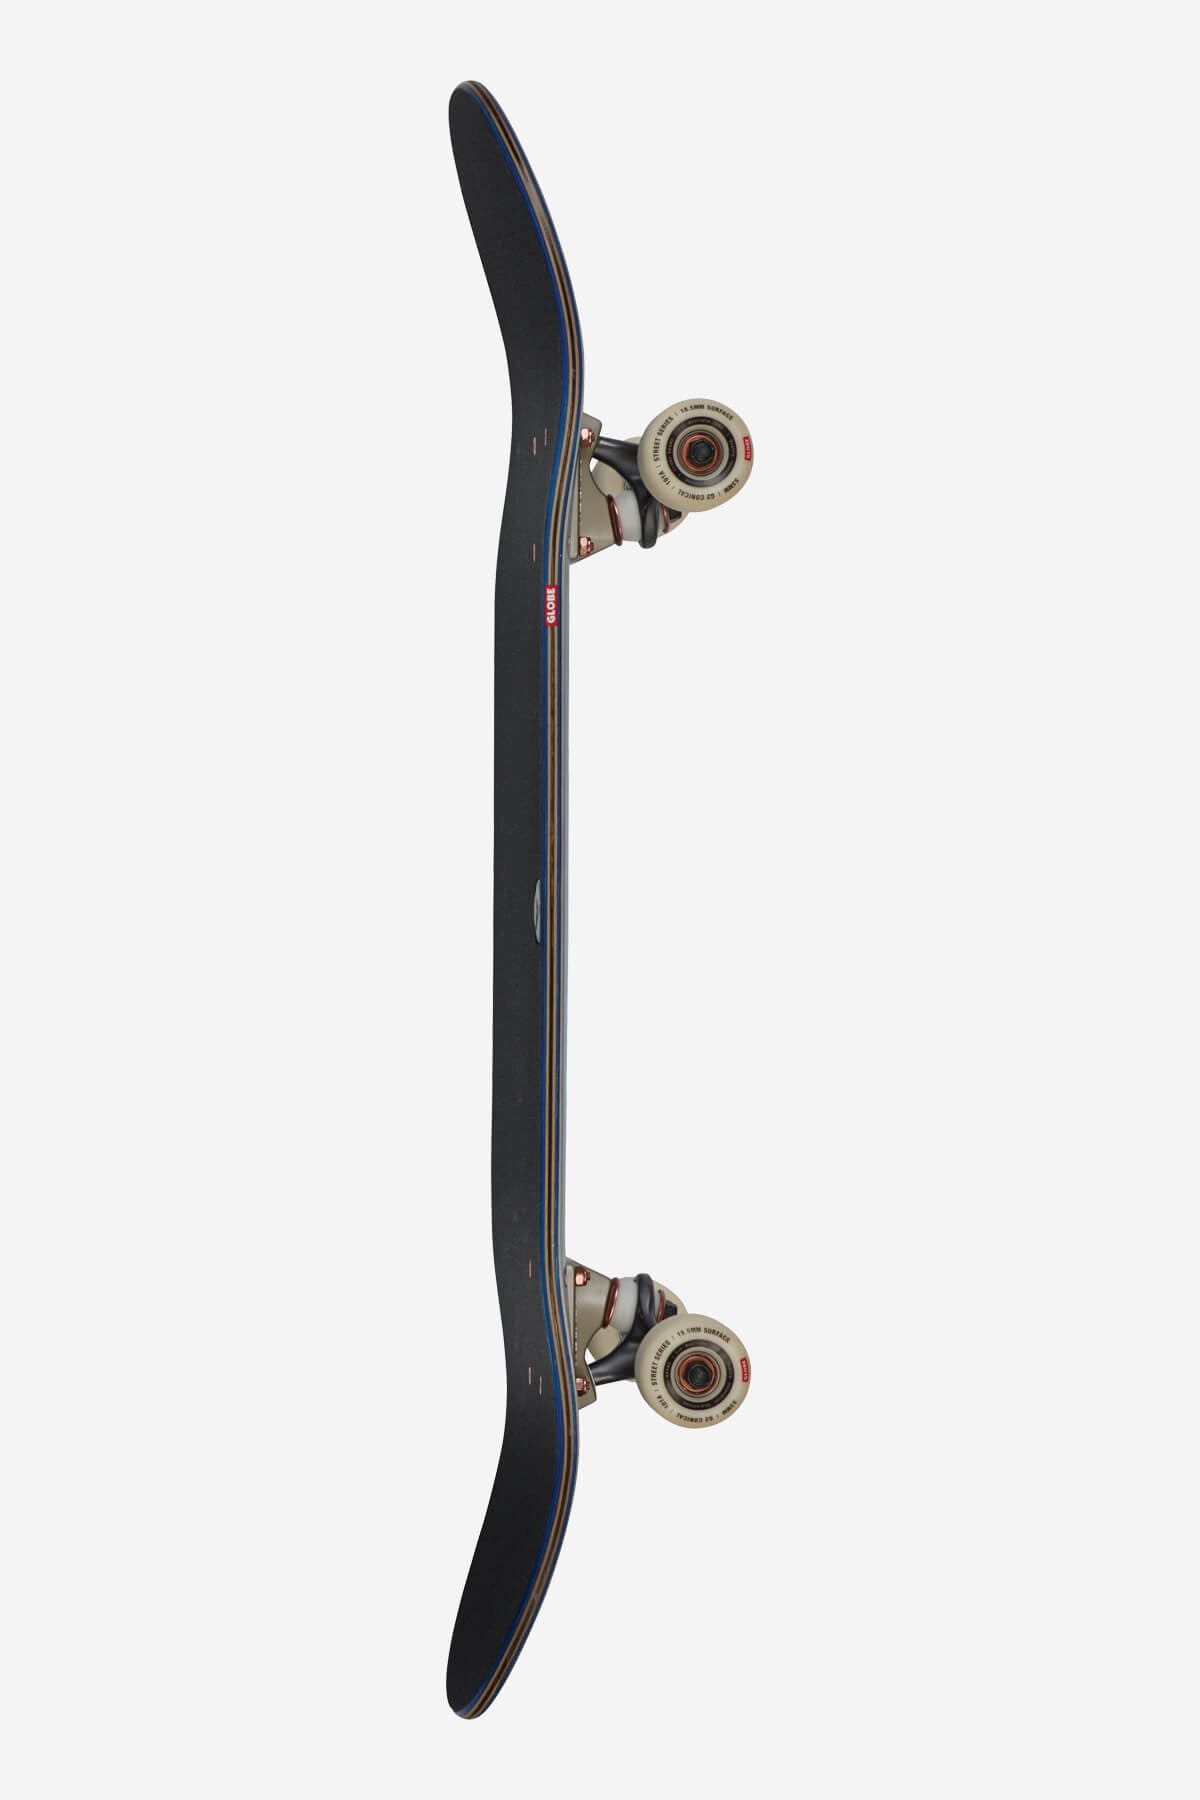 g2 rholtsu scorps 8.0" completo skateboard